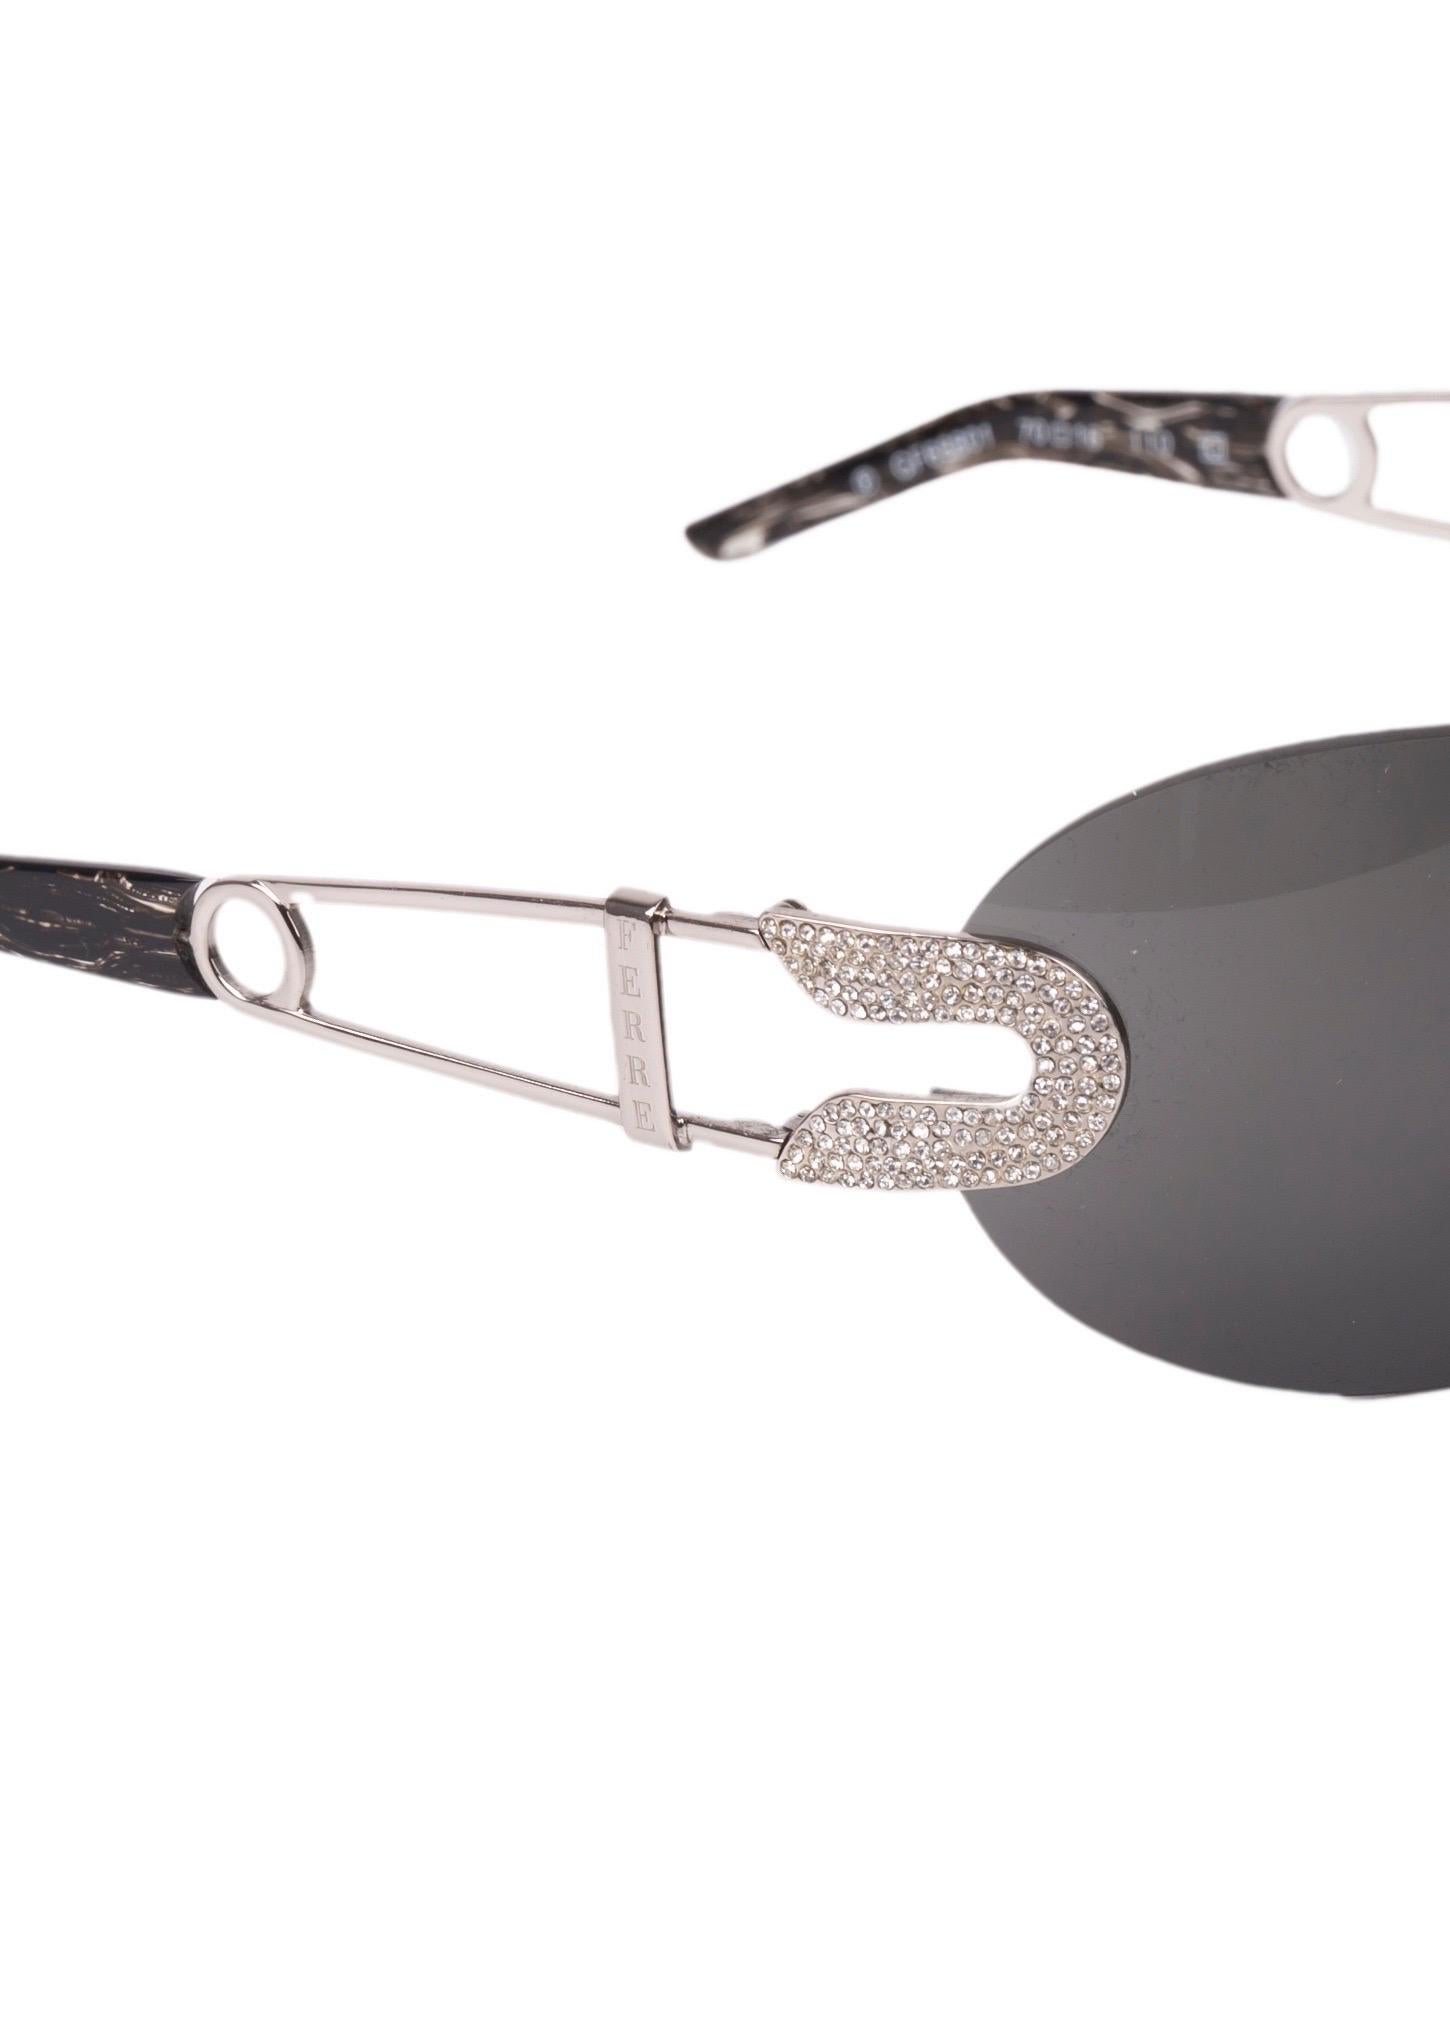 - Rimless sunglasses
- Swarovski encrusted “safety pin” temple
- Swarovski encrusted nose bridge
- Black lenses
- Comes with original case
